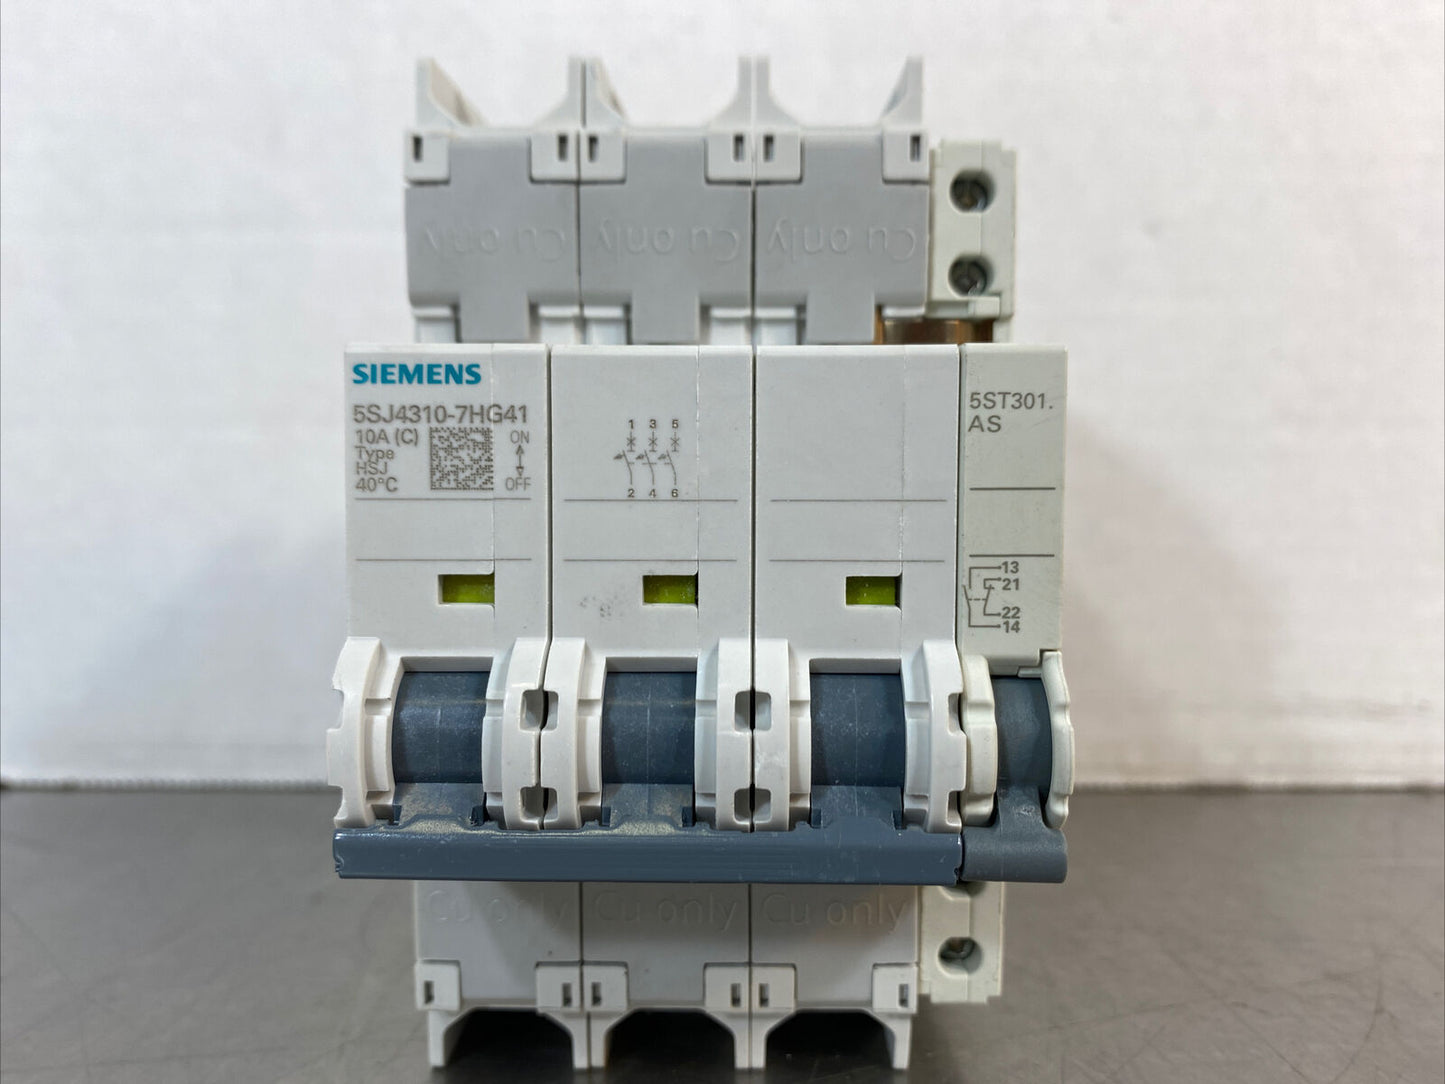 Siemens 5SJ4310-7HG41 Circuit Breaker w/ 5ST3010 Auxiliary Circuit Switch     4D